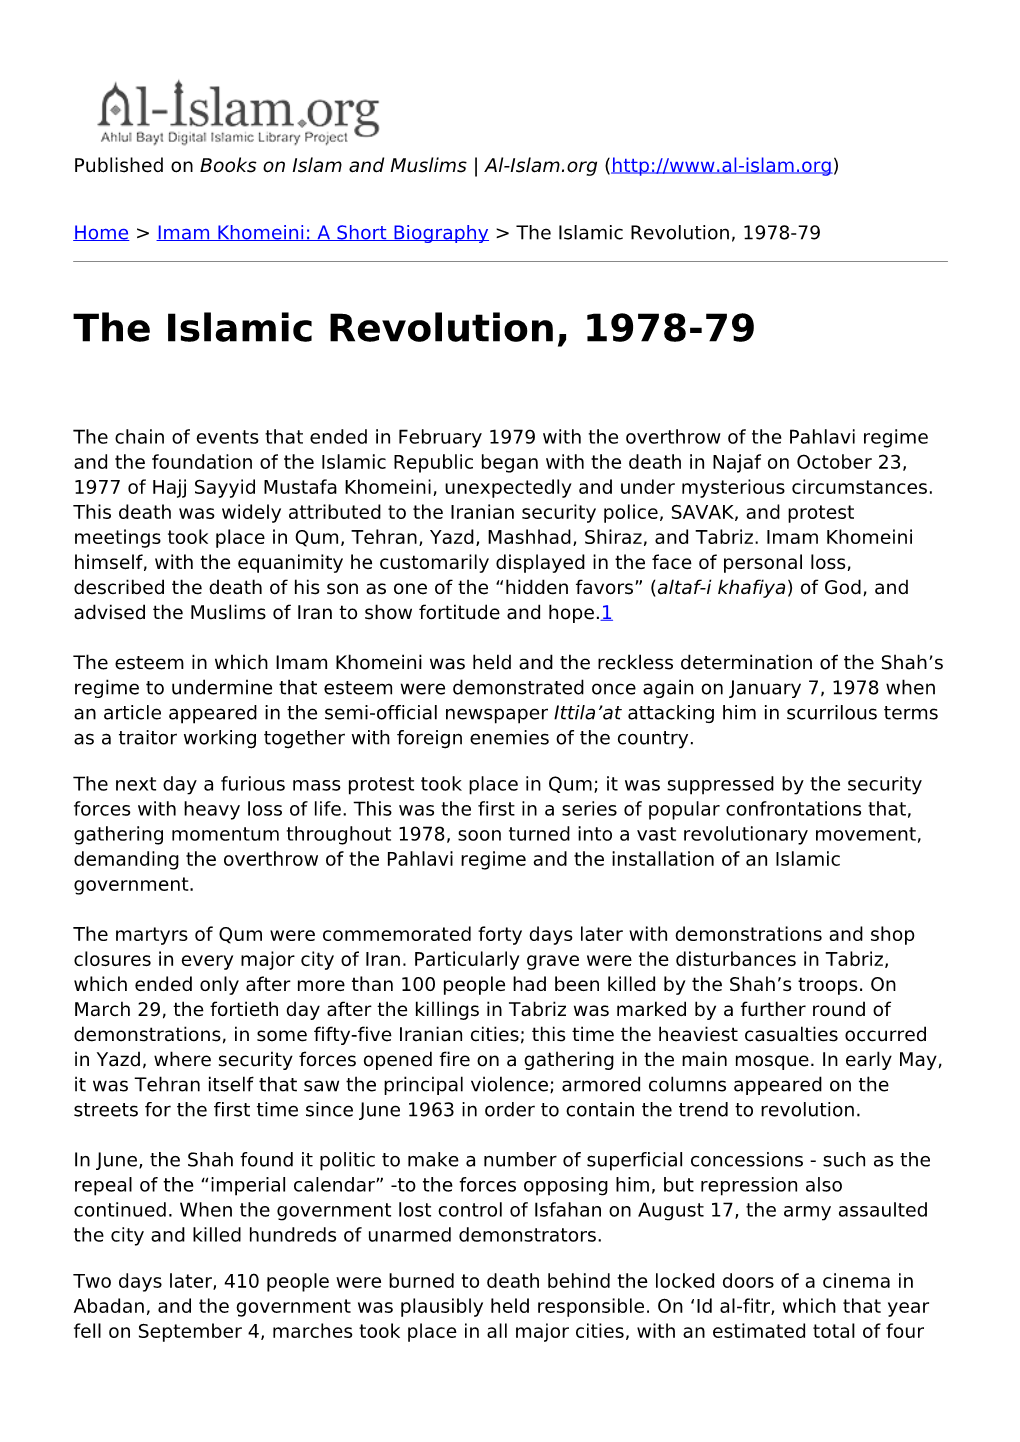 The Islamic Revolution, 1978-79